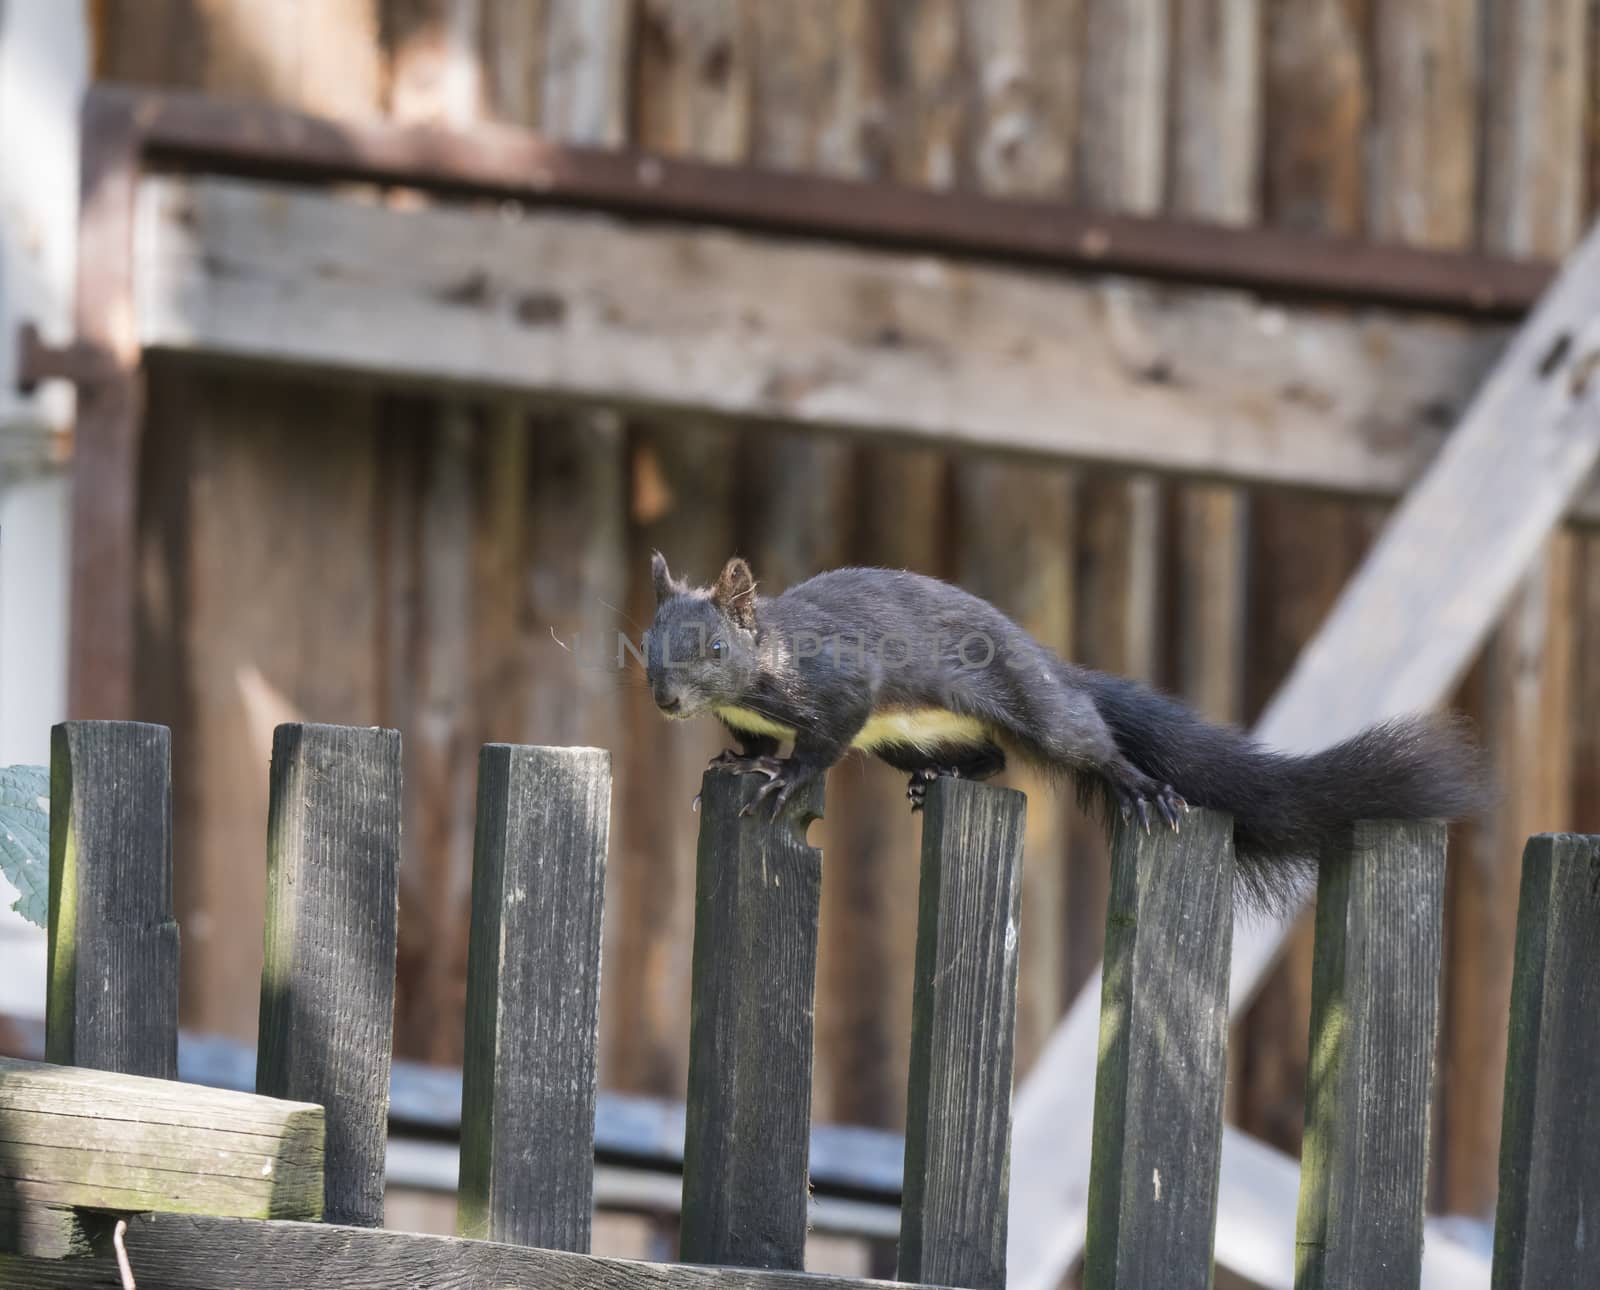 Close up Black squirrel, Sciurus vulgaris climbing on wooden fence paling. Selective focus, copy space.